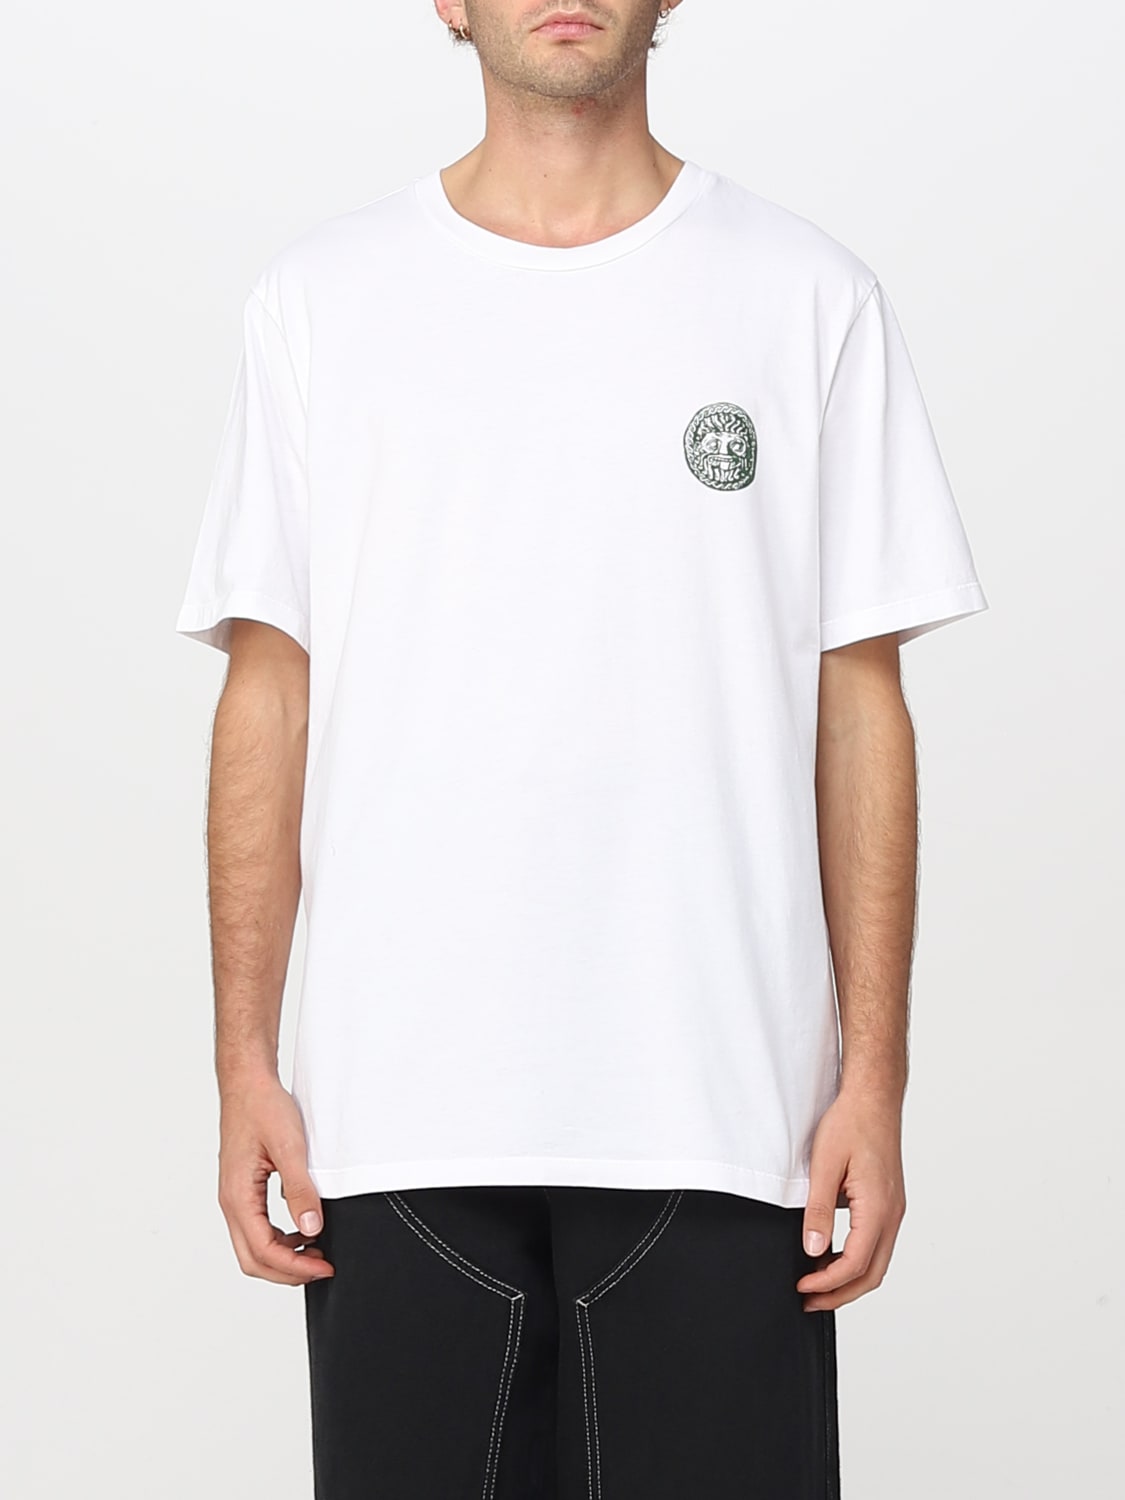 PAURA: for man - White | Paura t-shirt online on GIGLIO.COM